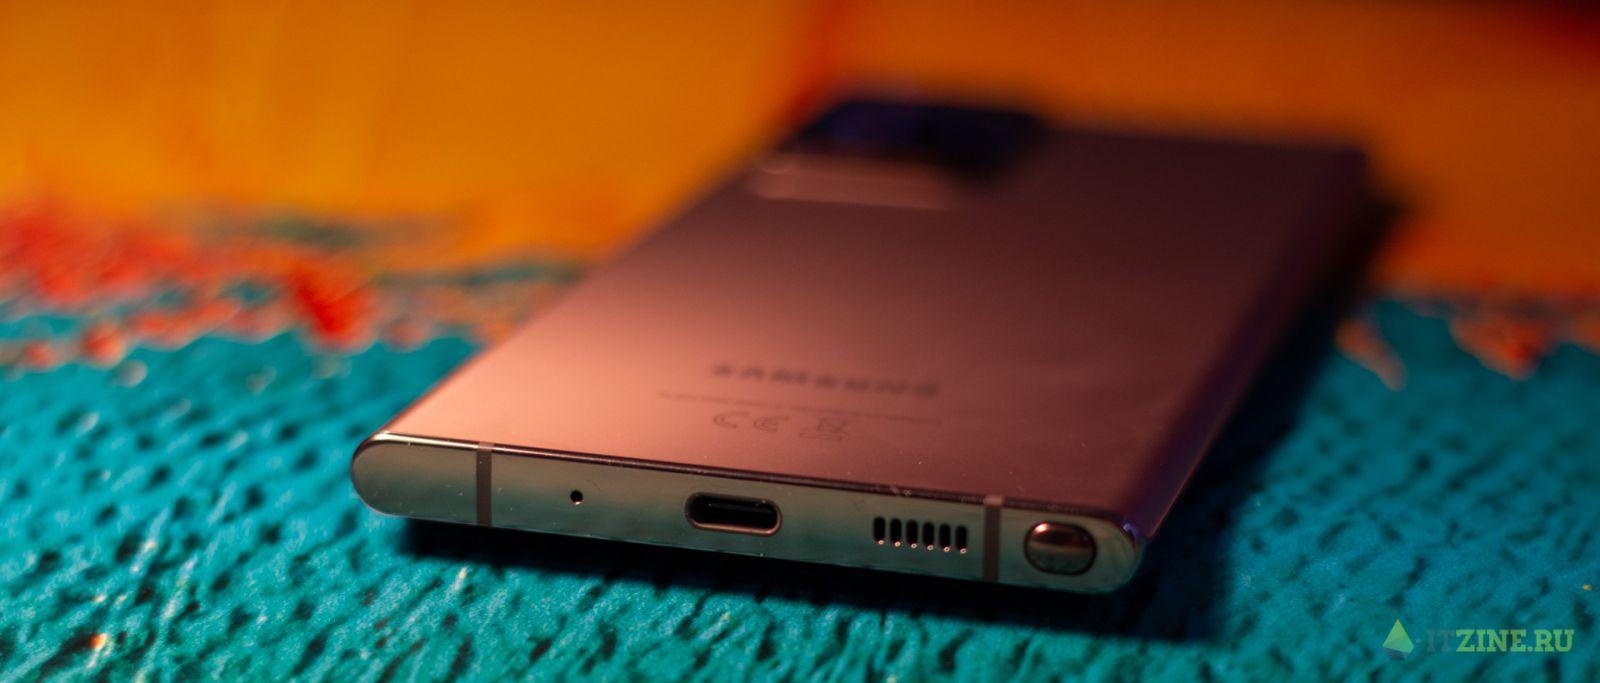 Динамики, USB-C и стилус Samsung Galaxy Note20 Ultra